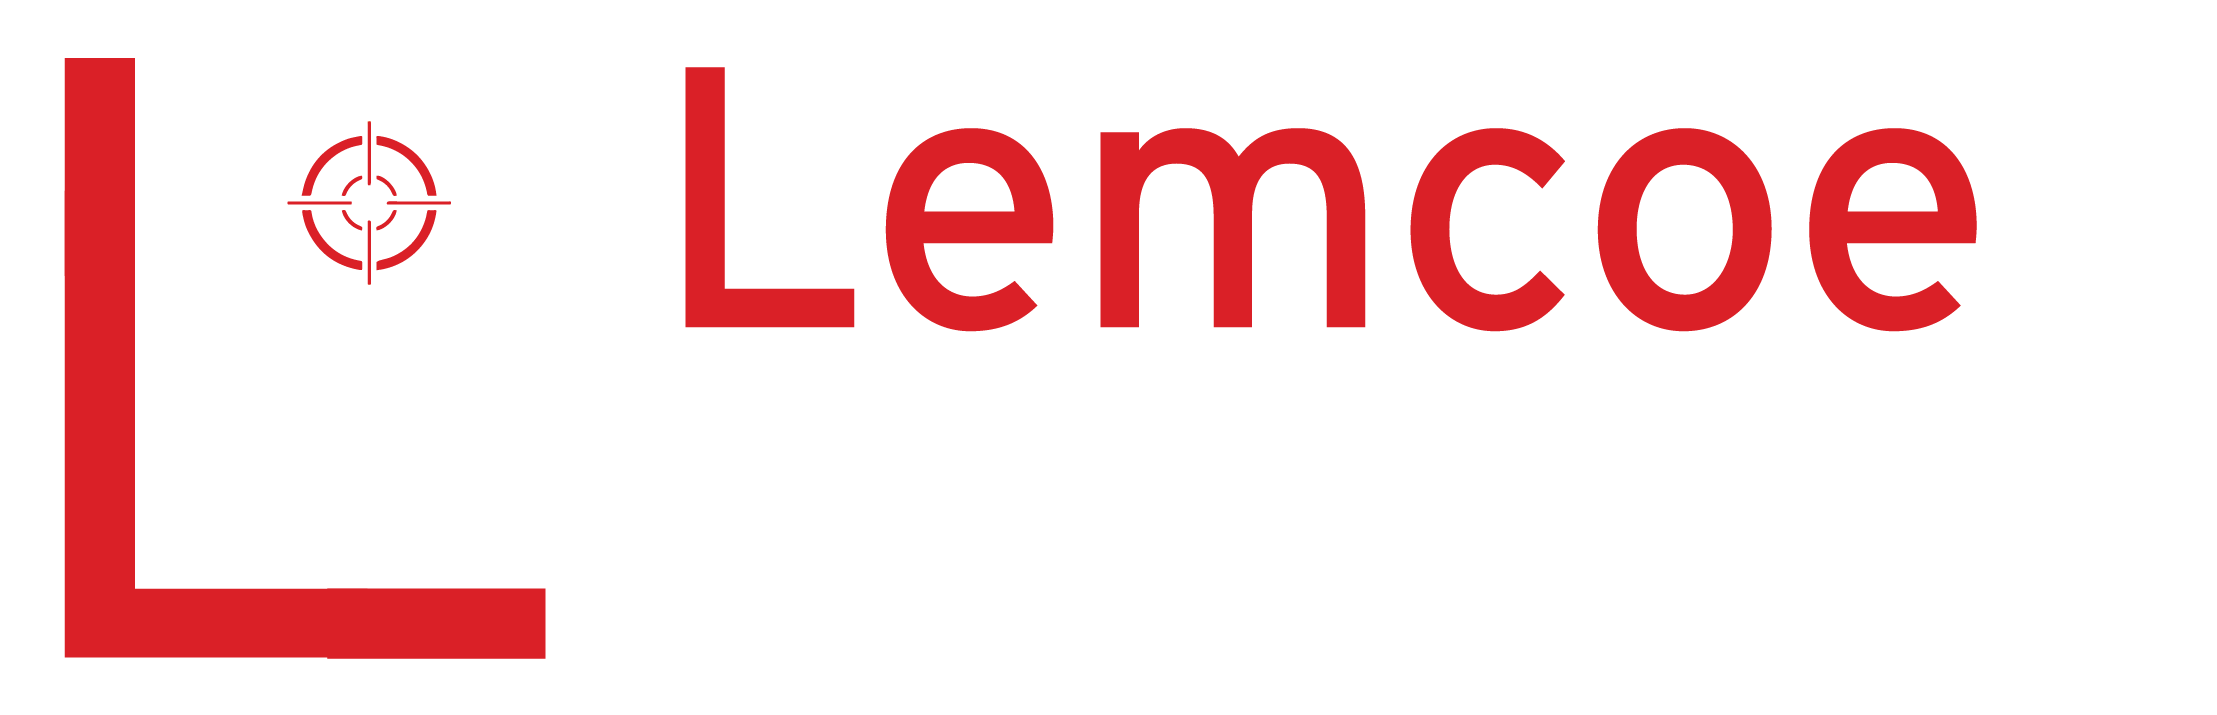 Lemcoe Precision